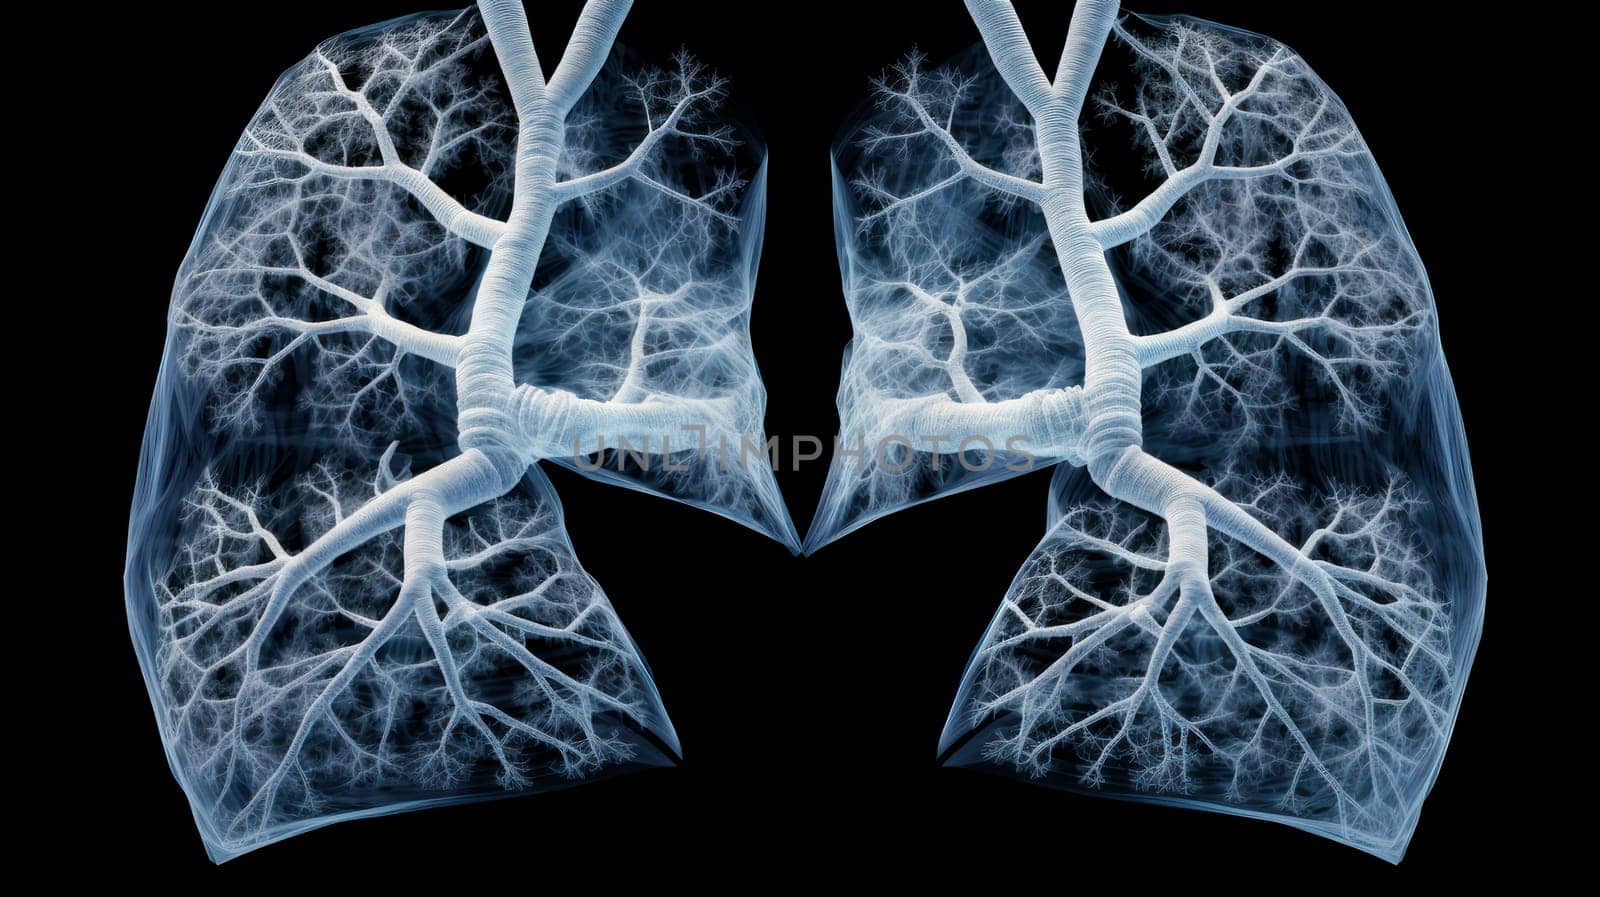 Human lungs on X-ray, human bones on a dark background. by Alla_Yurtayeva